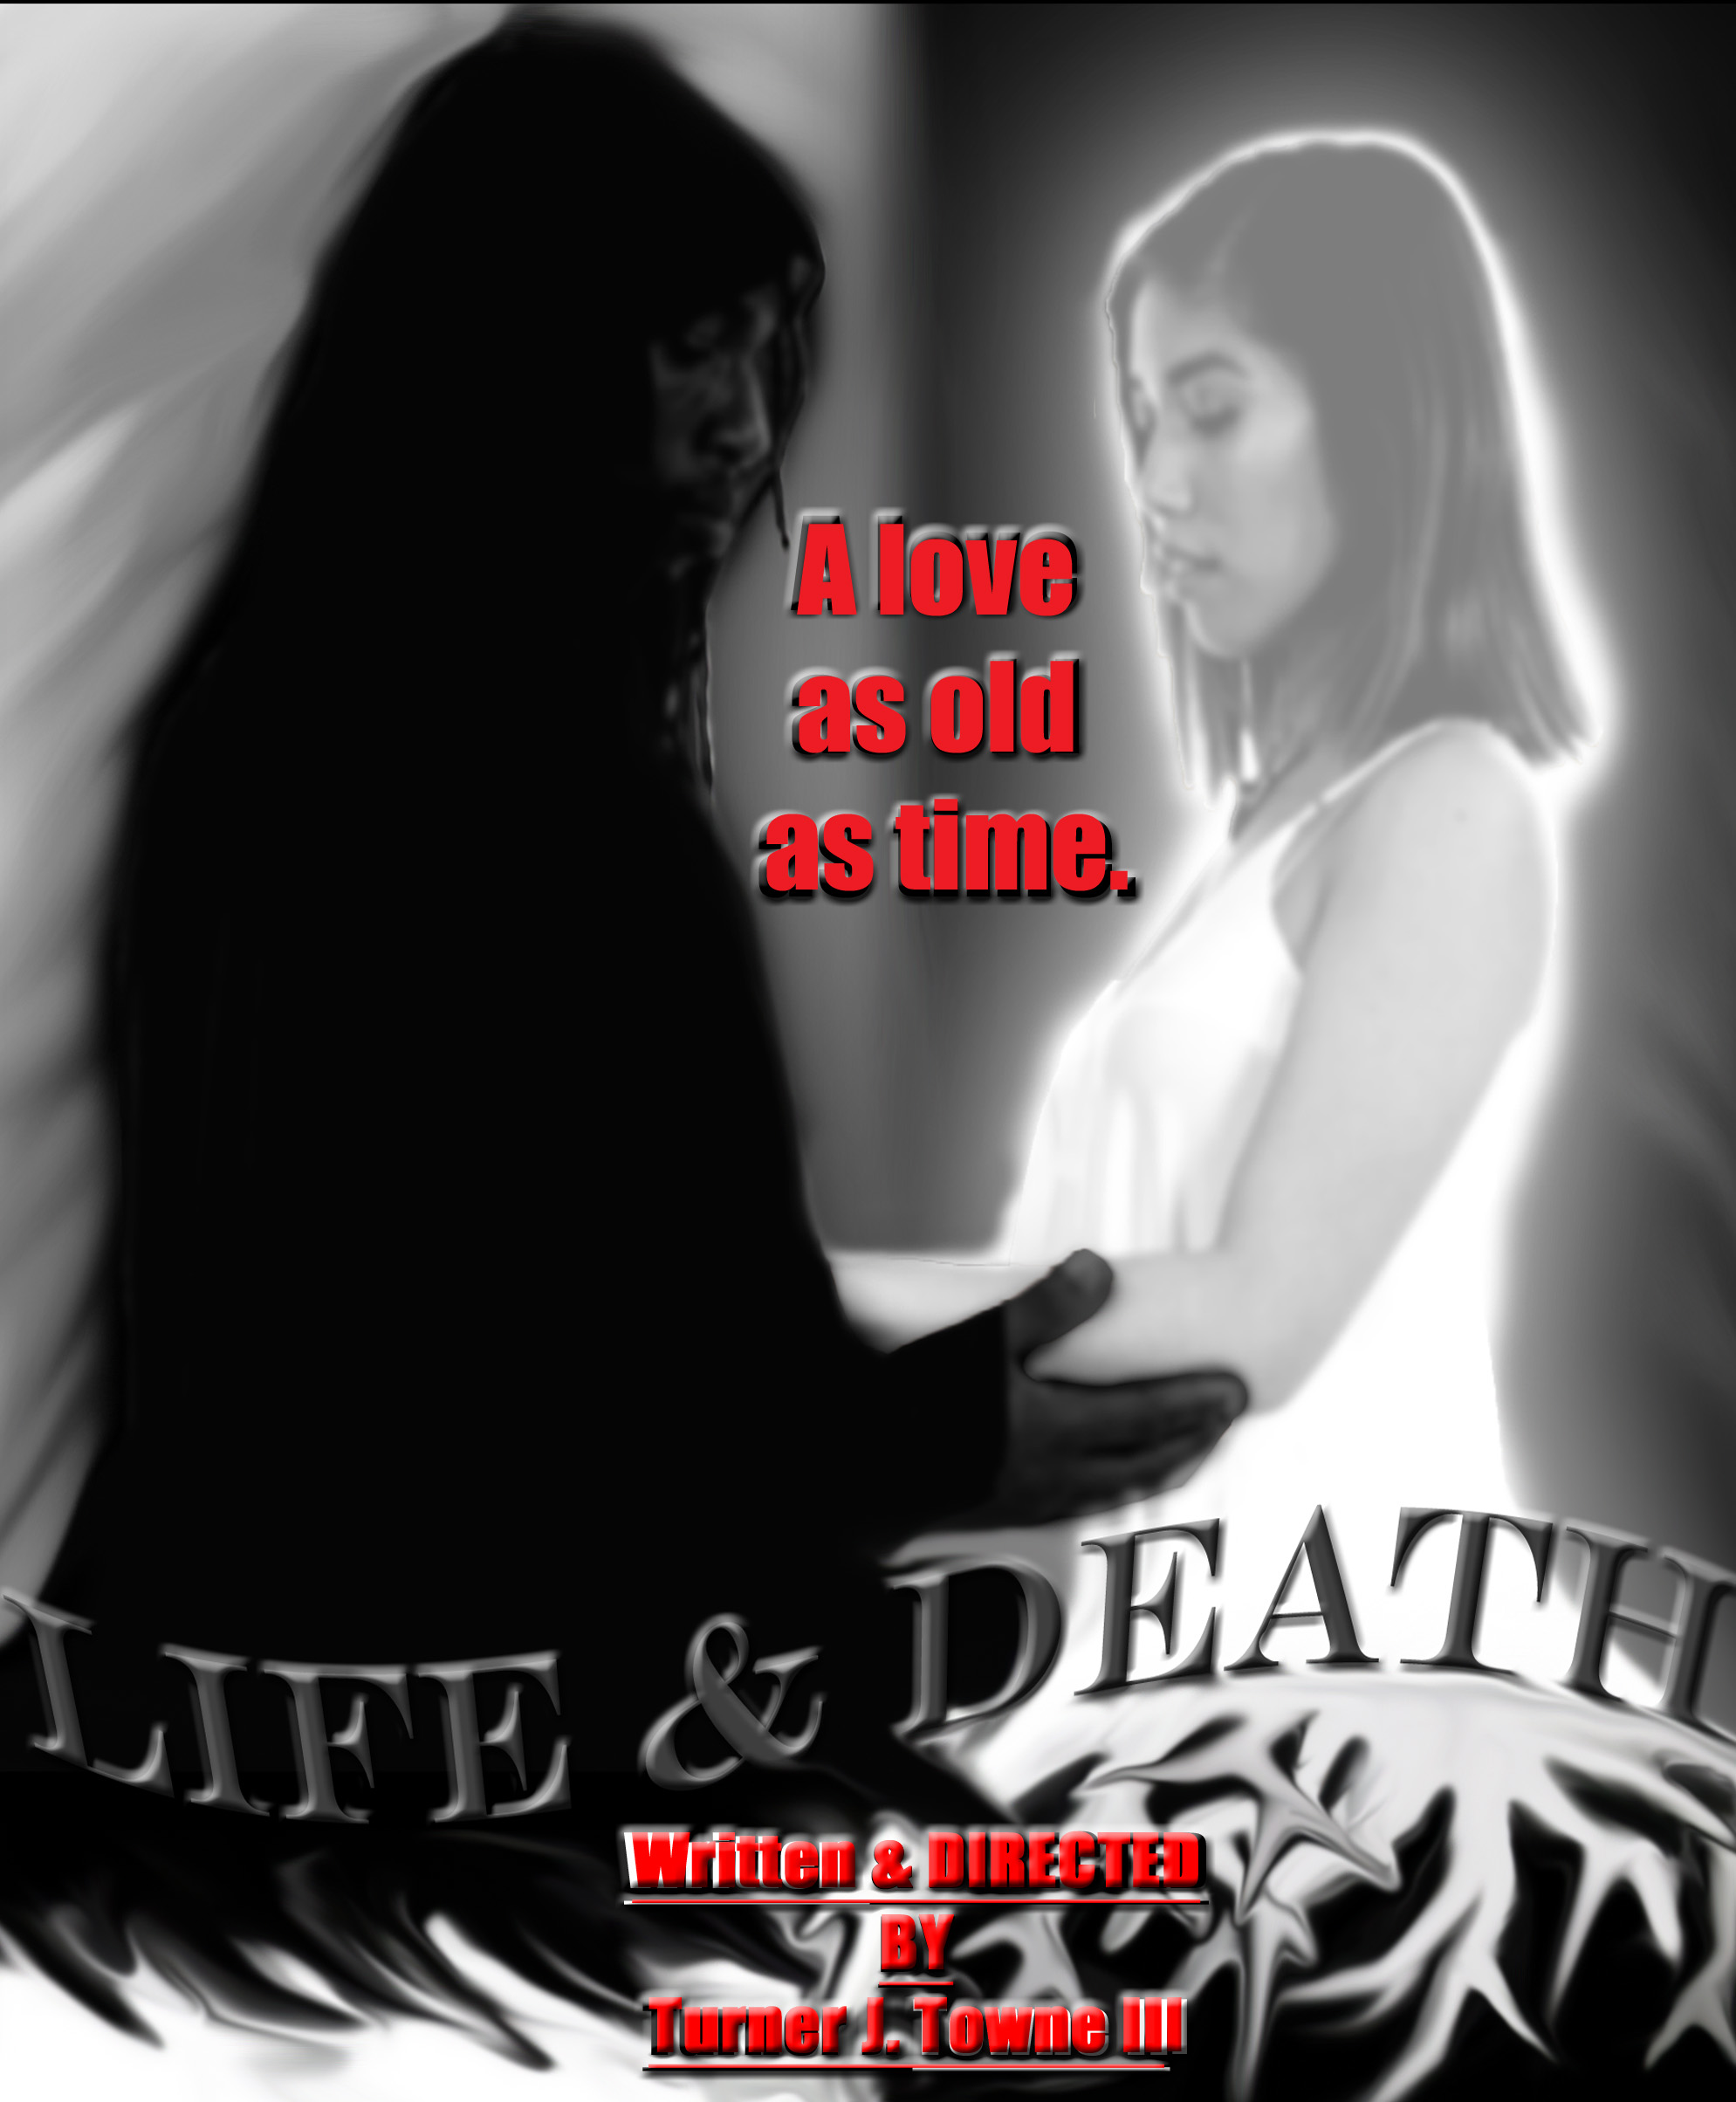 Life & Death (2020)